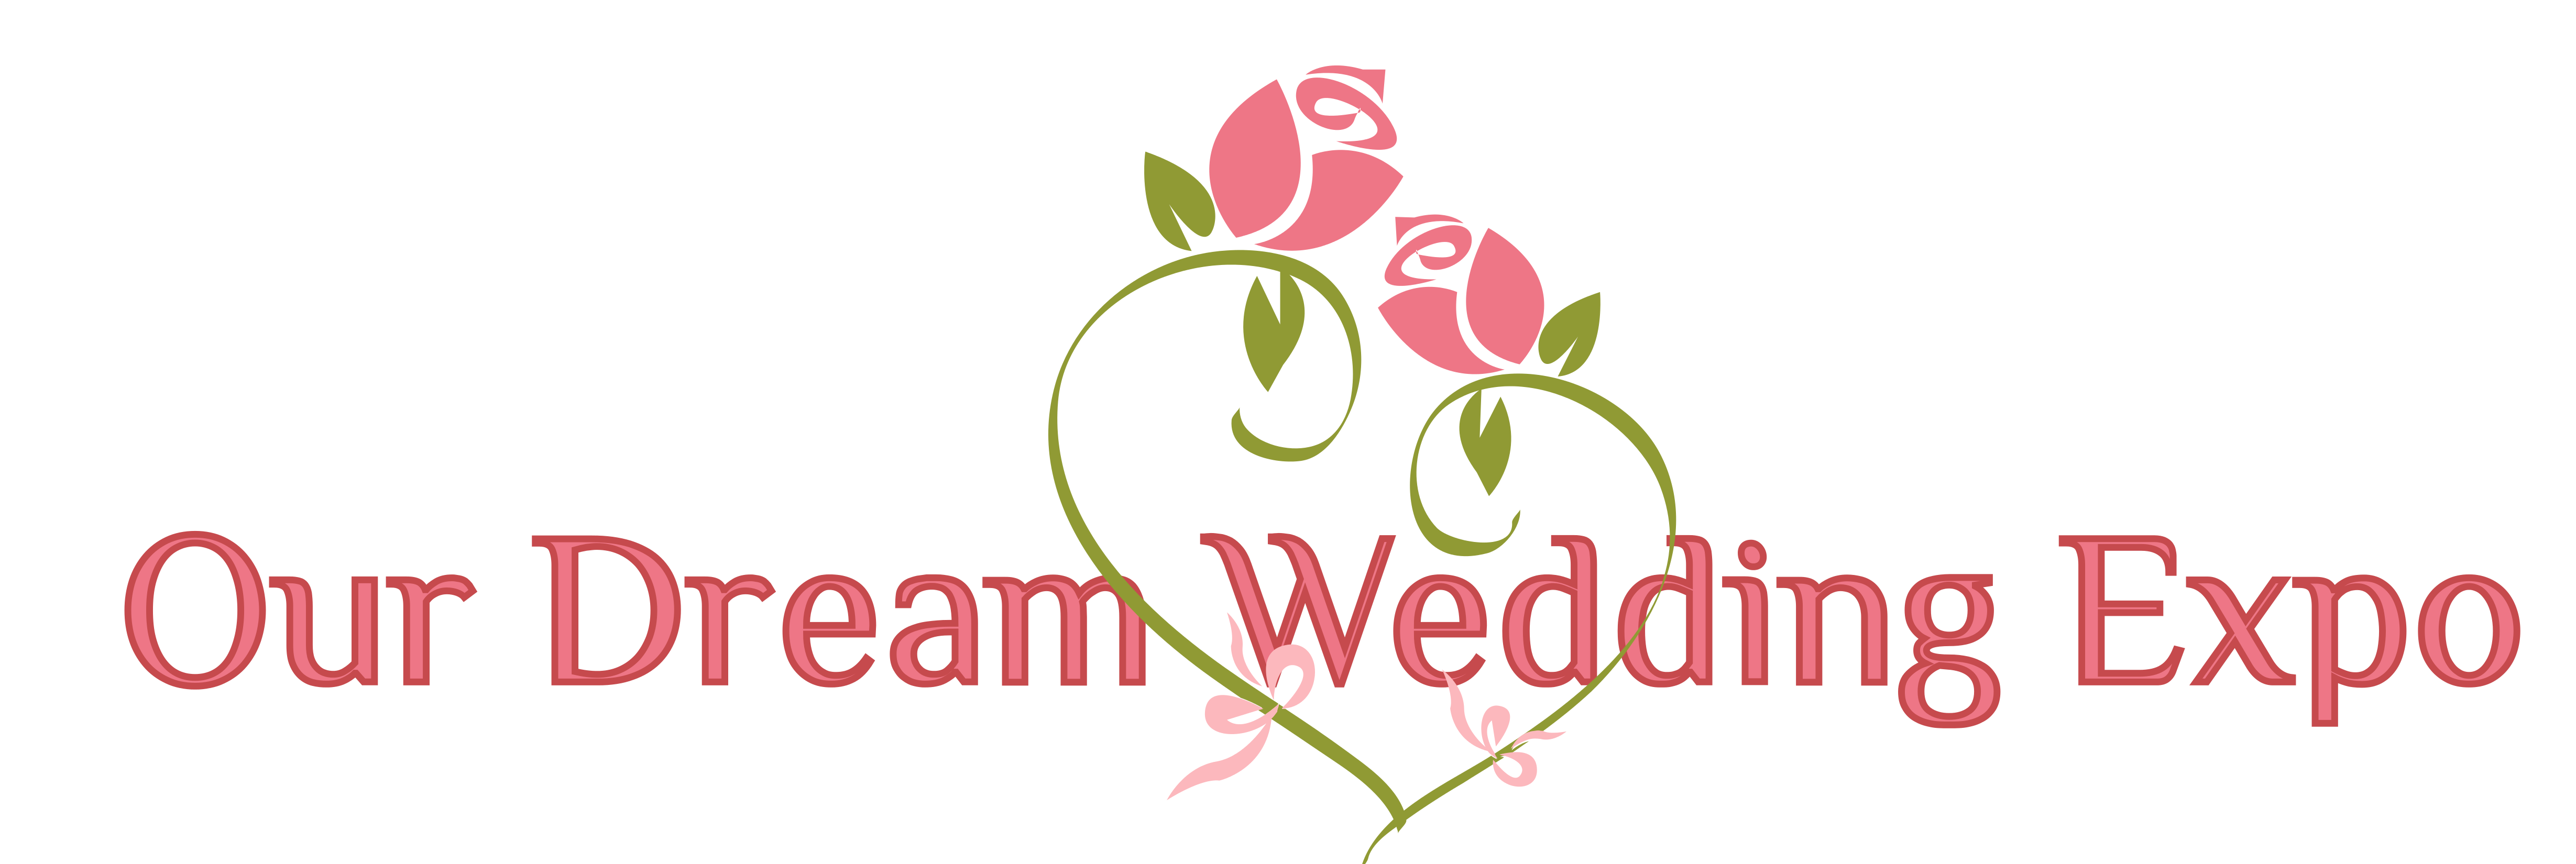 Our Dream Wedding Expo - Making Dream Weddings Come True